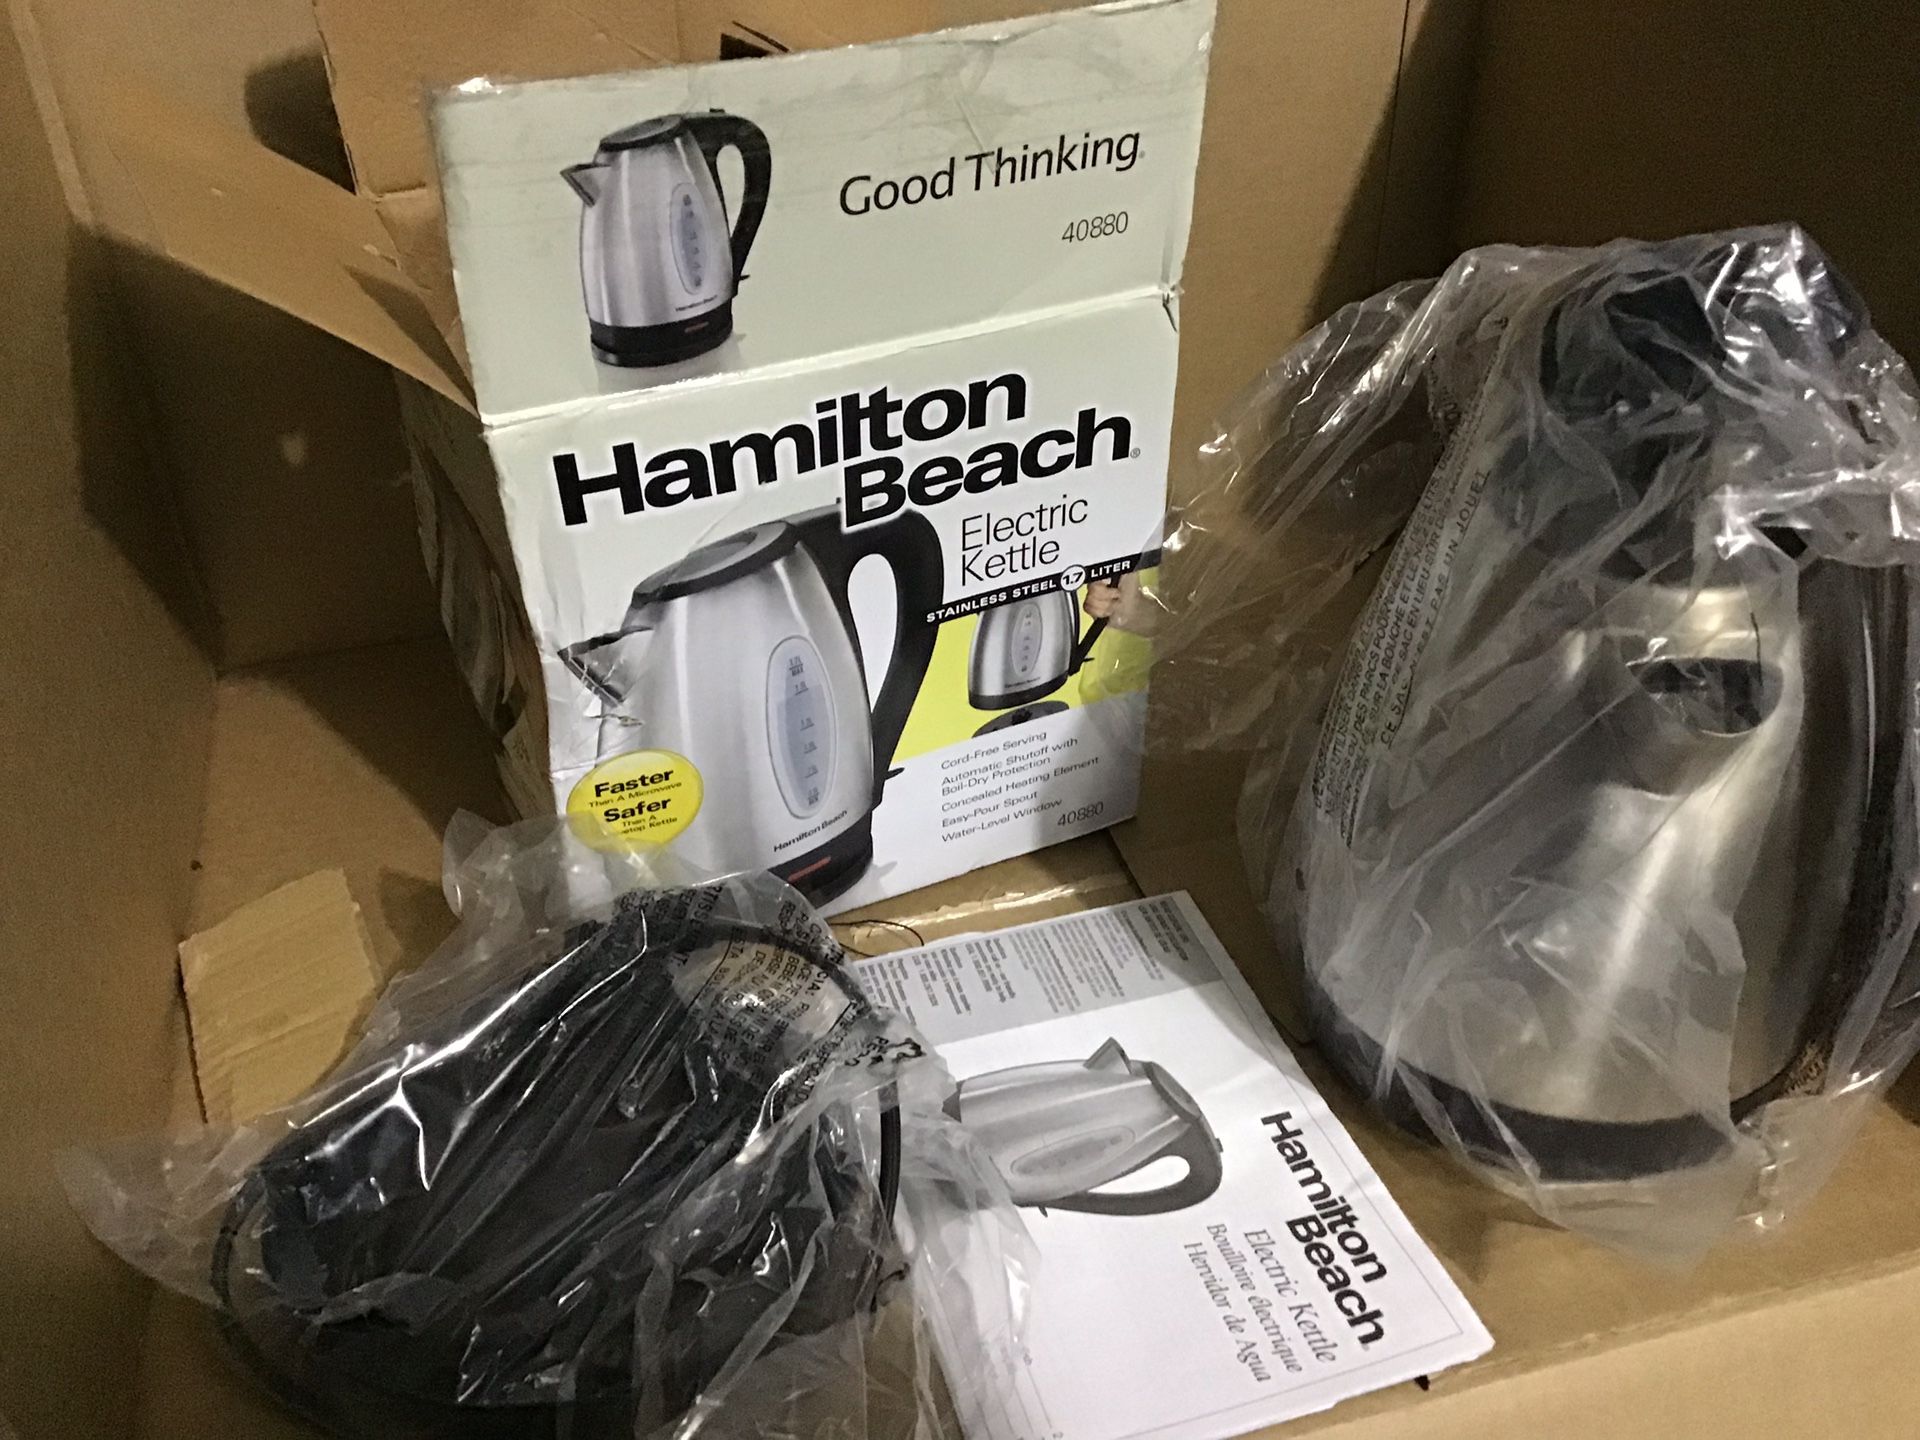 Hamilton beach electric kettle